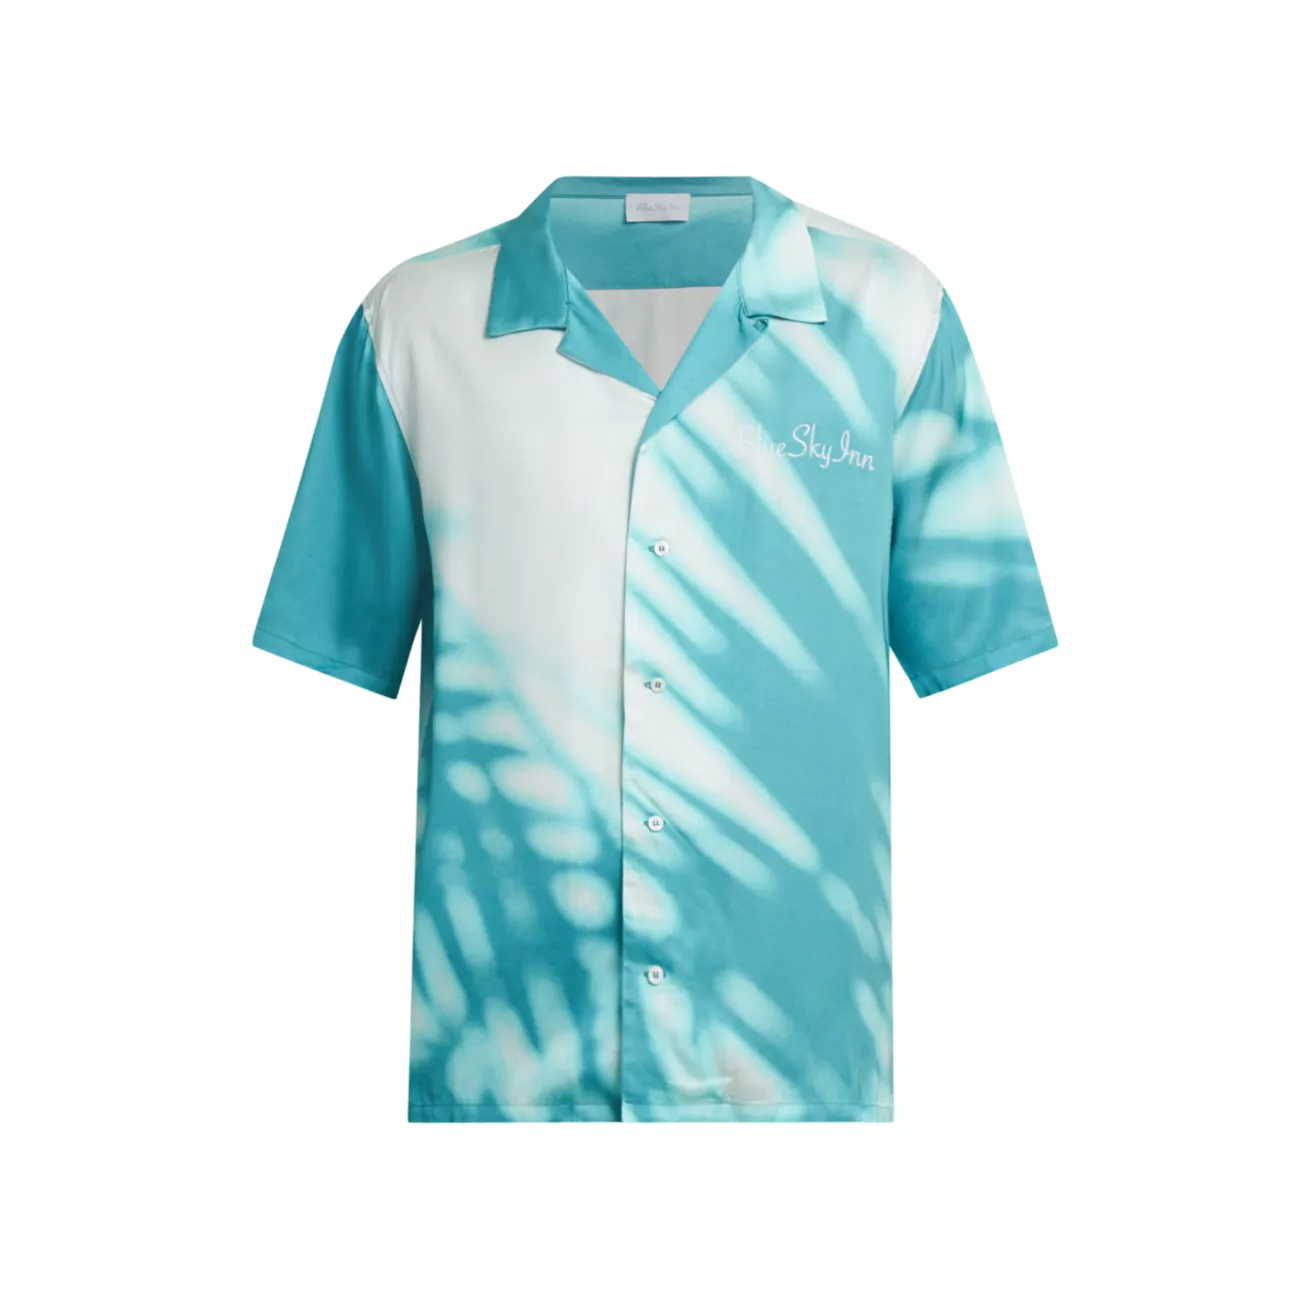 Рубашка на пуговицах Palm Shadow Blue Sky Inn